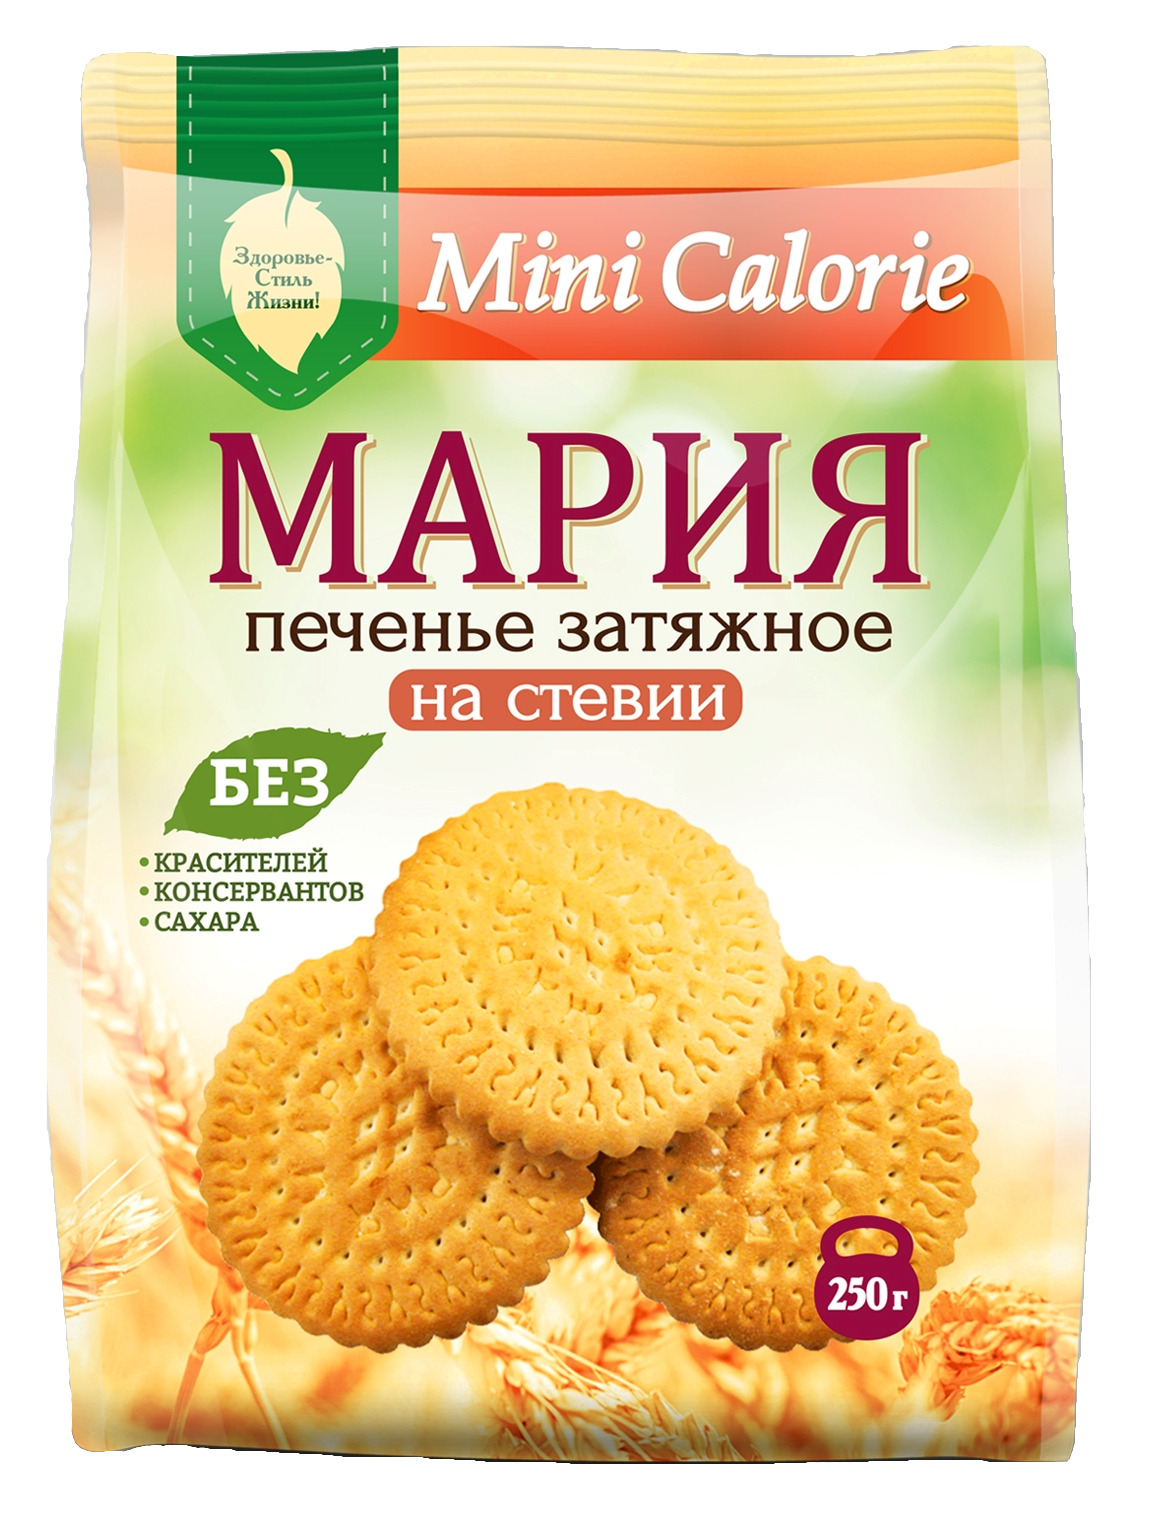 Печенье затяжное Мария на стевии ТМ "Mini Calorie" 250 гр. (1*20шт) Mini Calorie